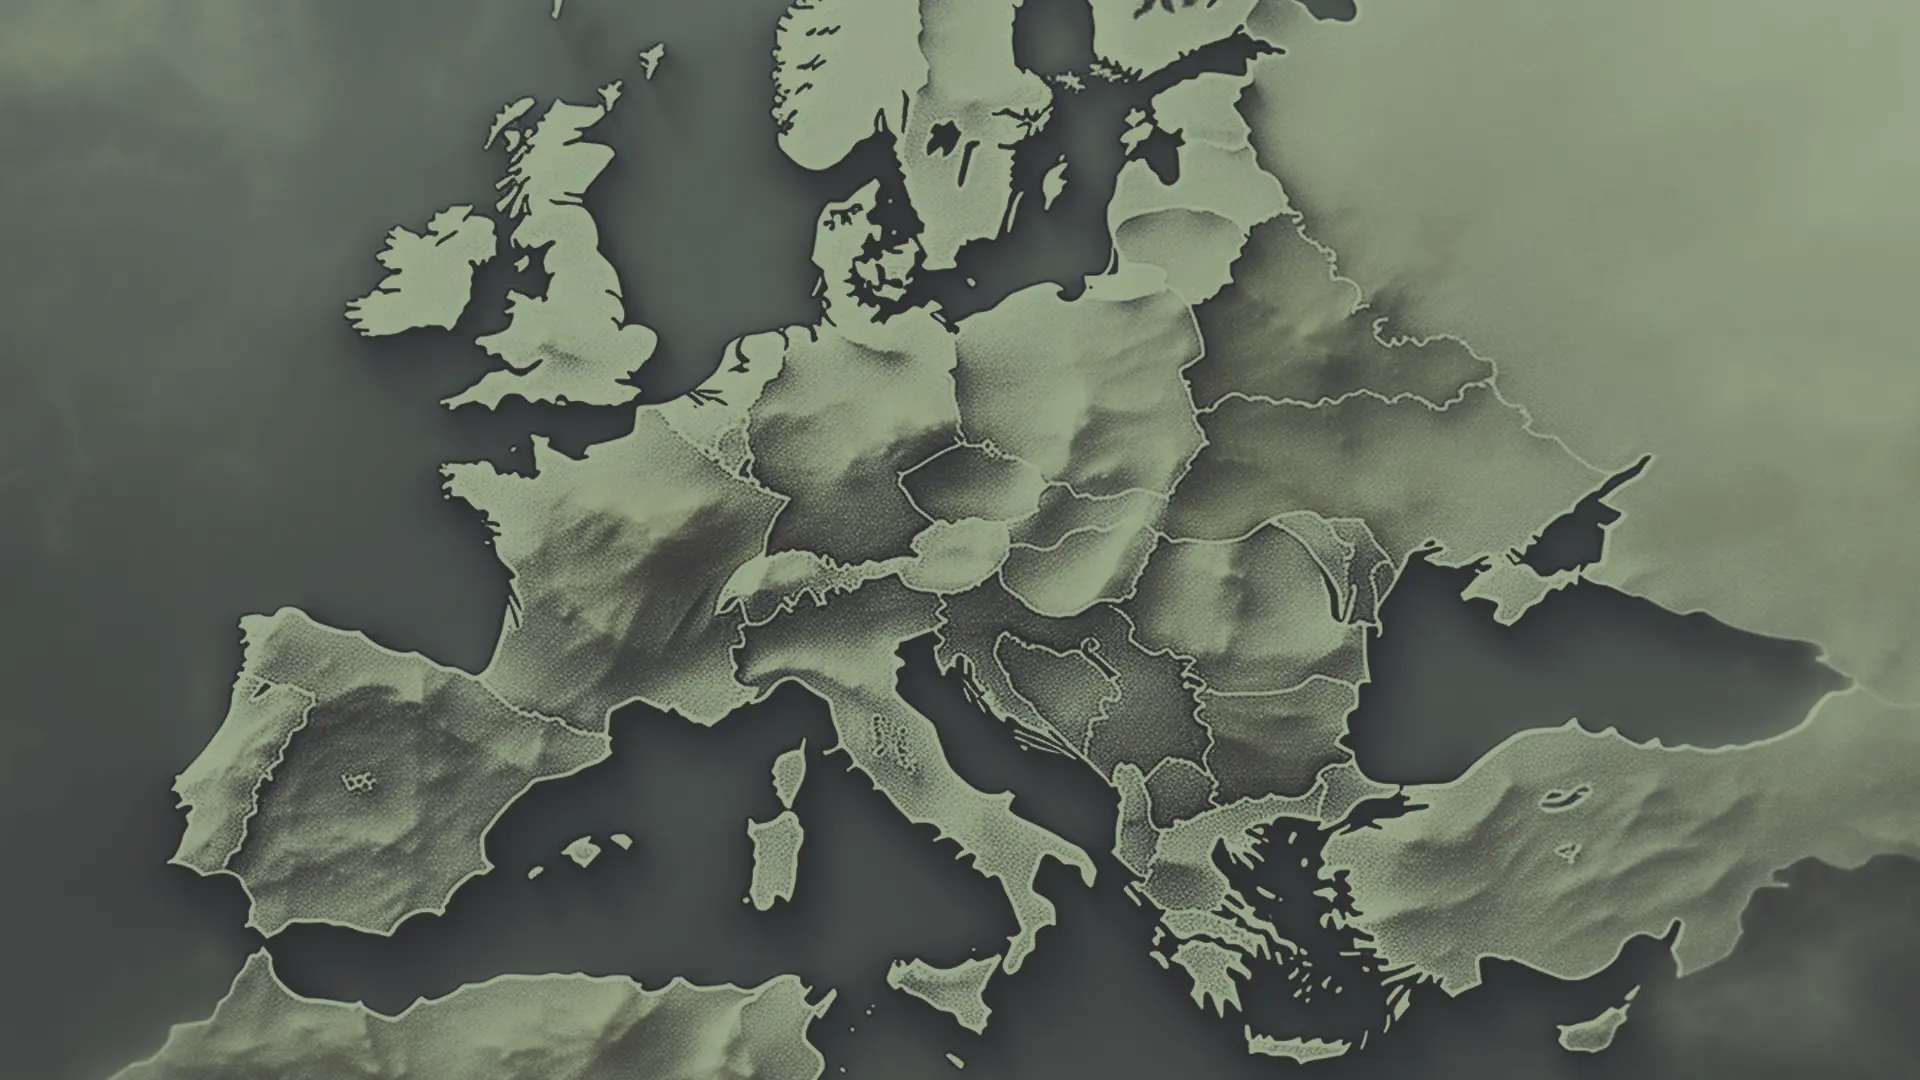 mapa de europa y zona schengen